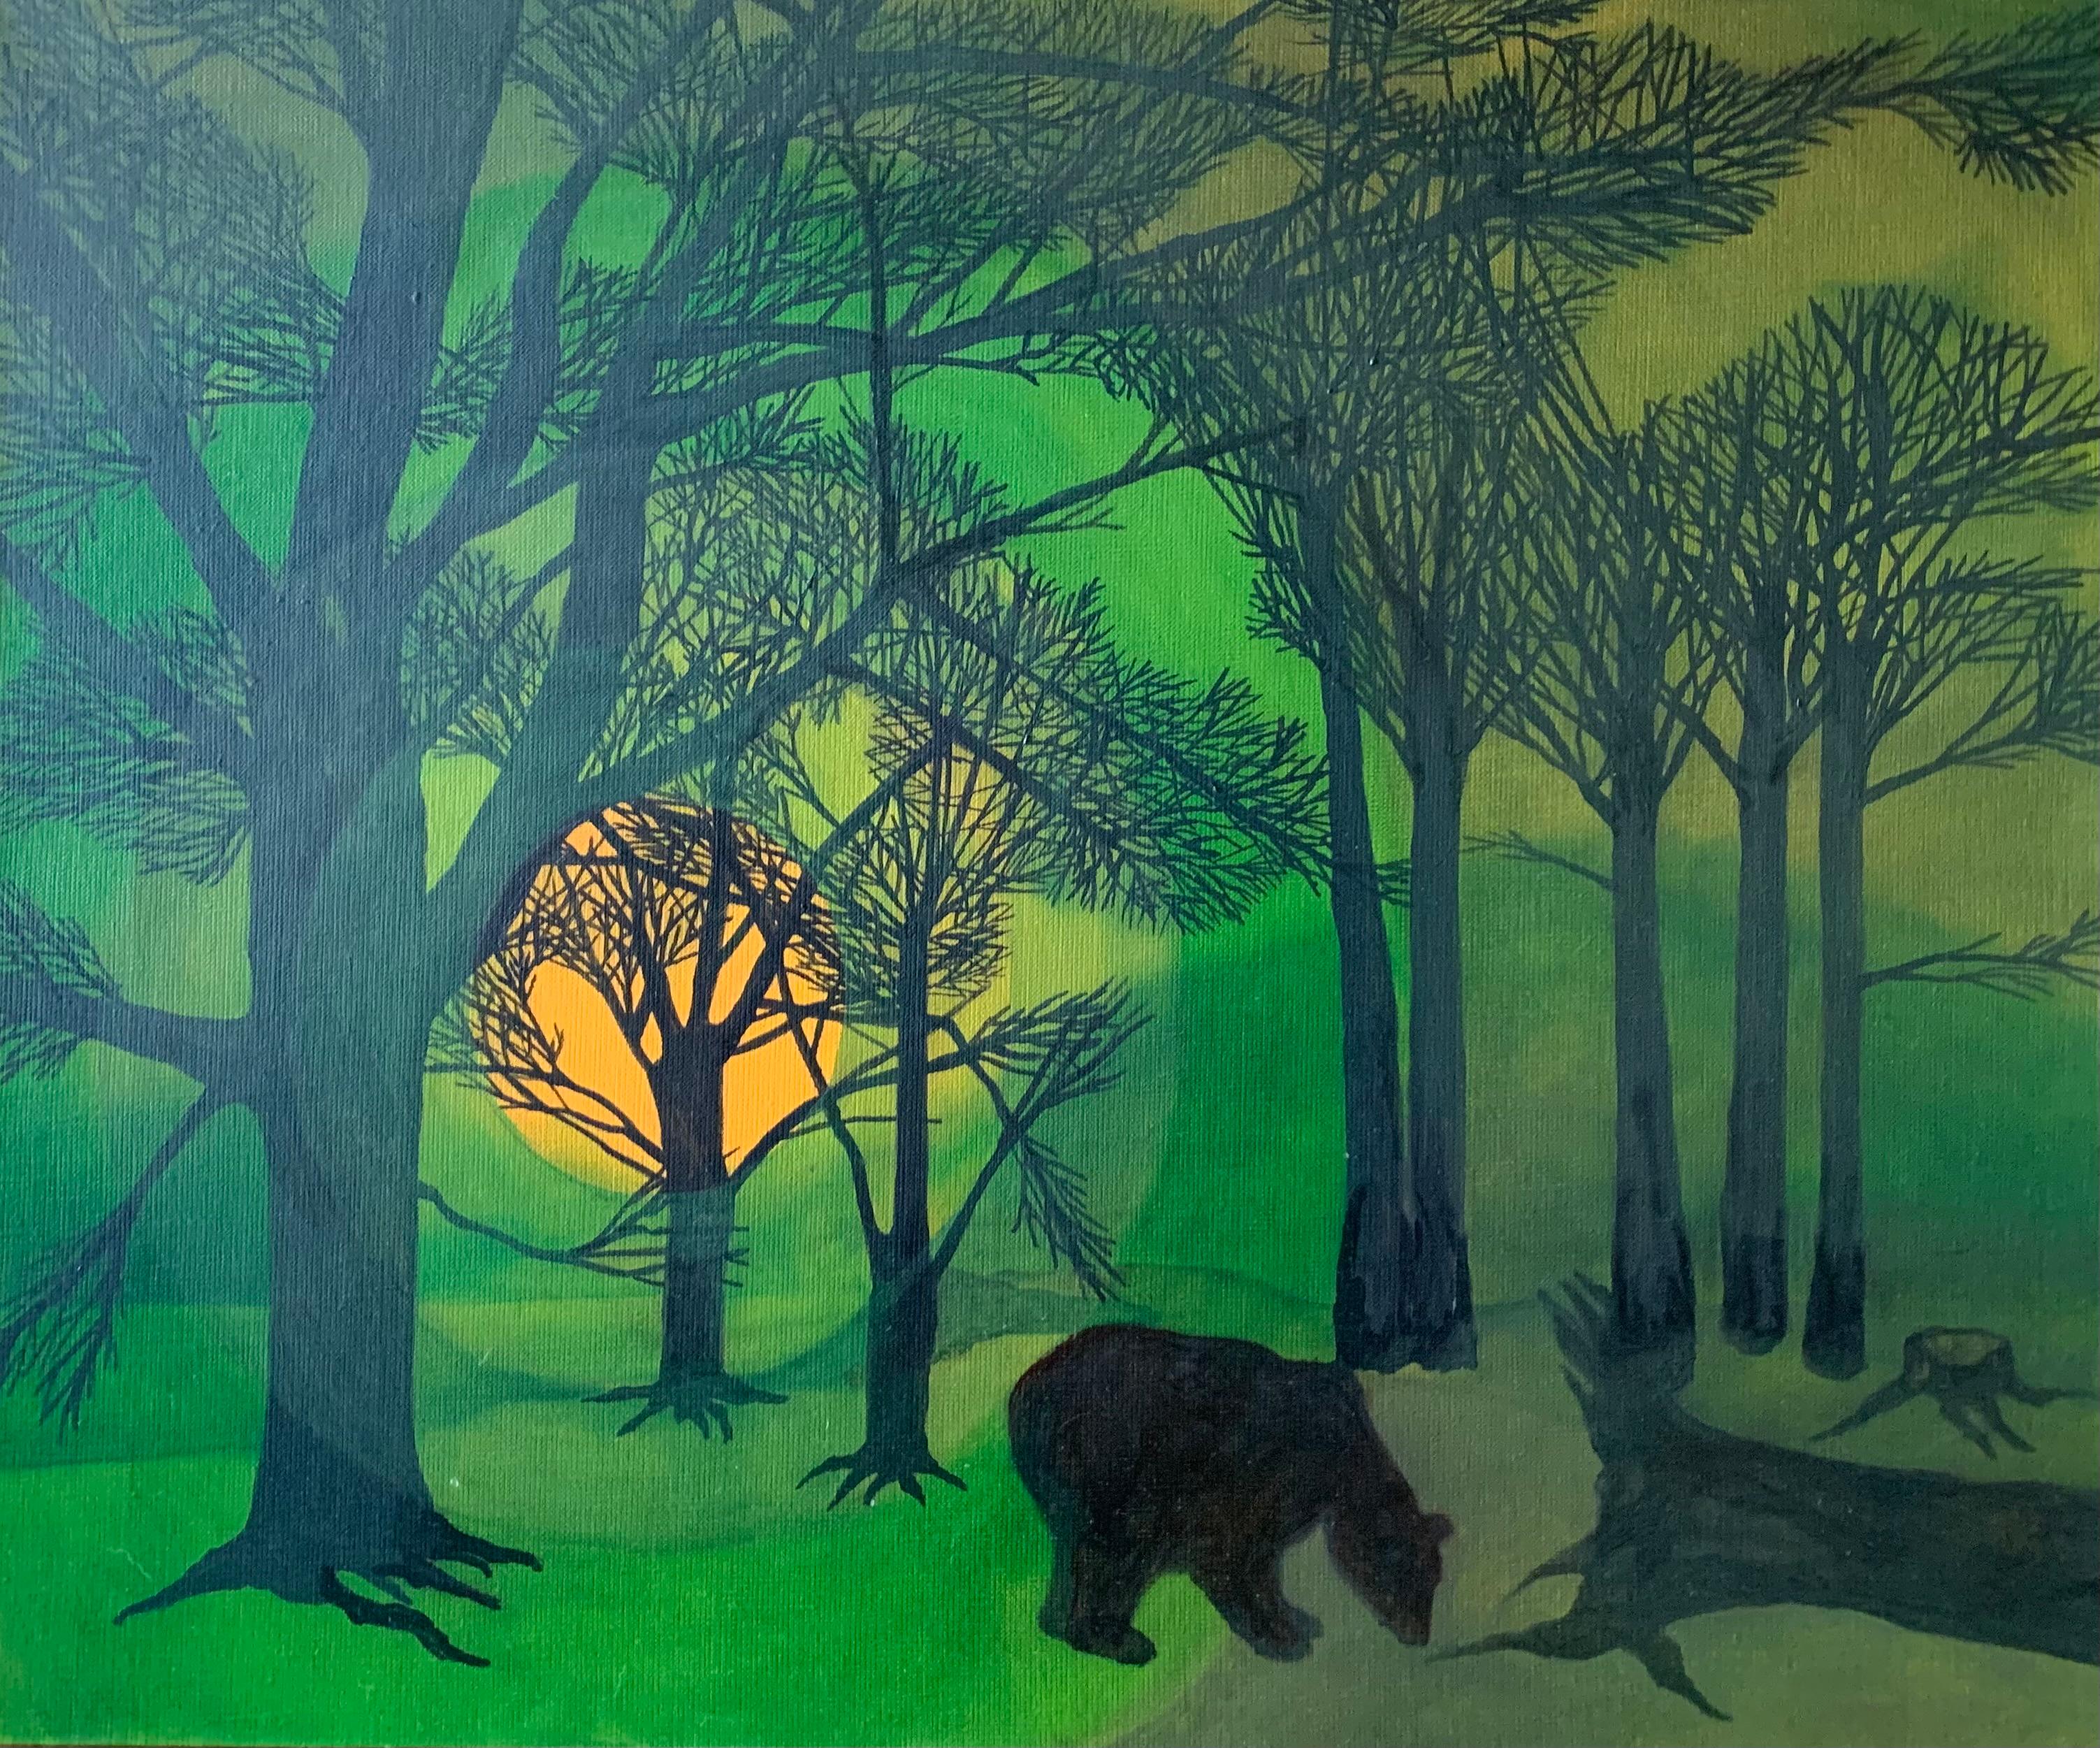 Aleksandra Bujnowska Landscape Painting - GOOD MORNING - Walking Bear- Contemporary Animal and Nature Oil Painting, Forest